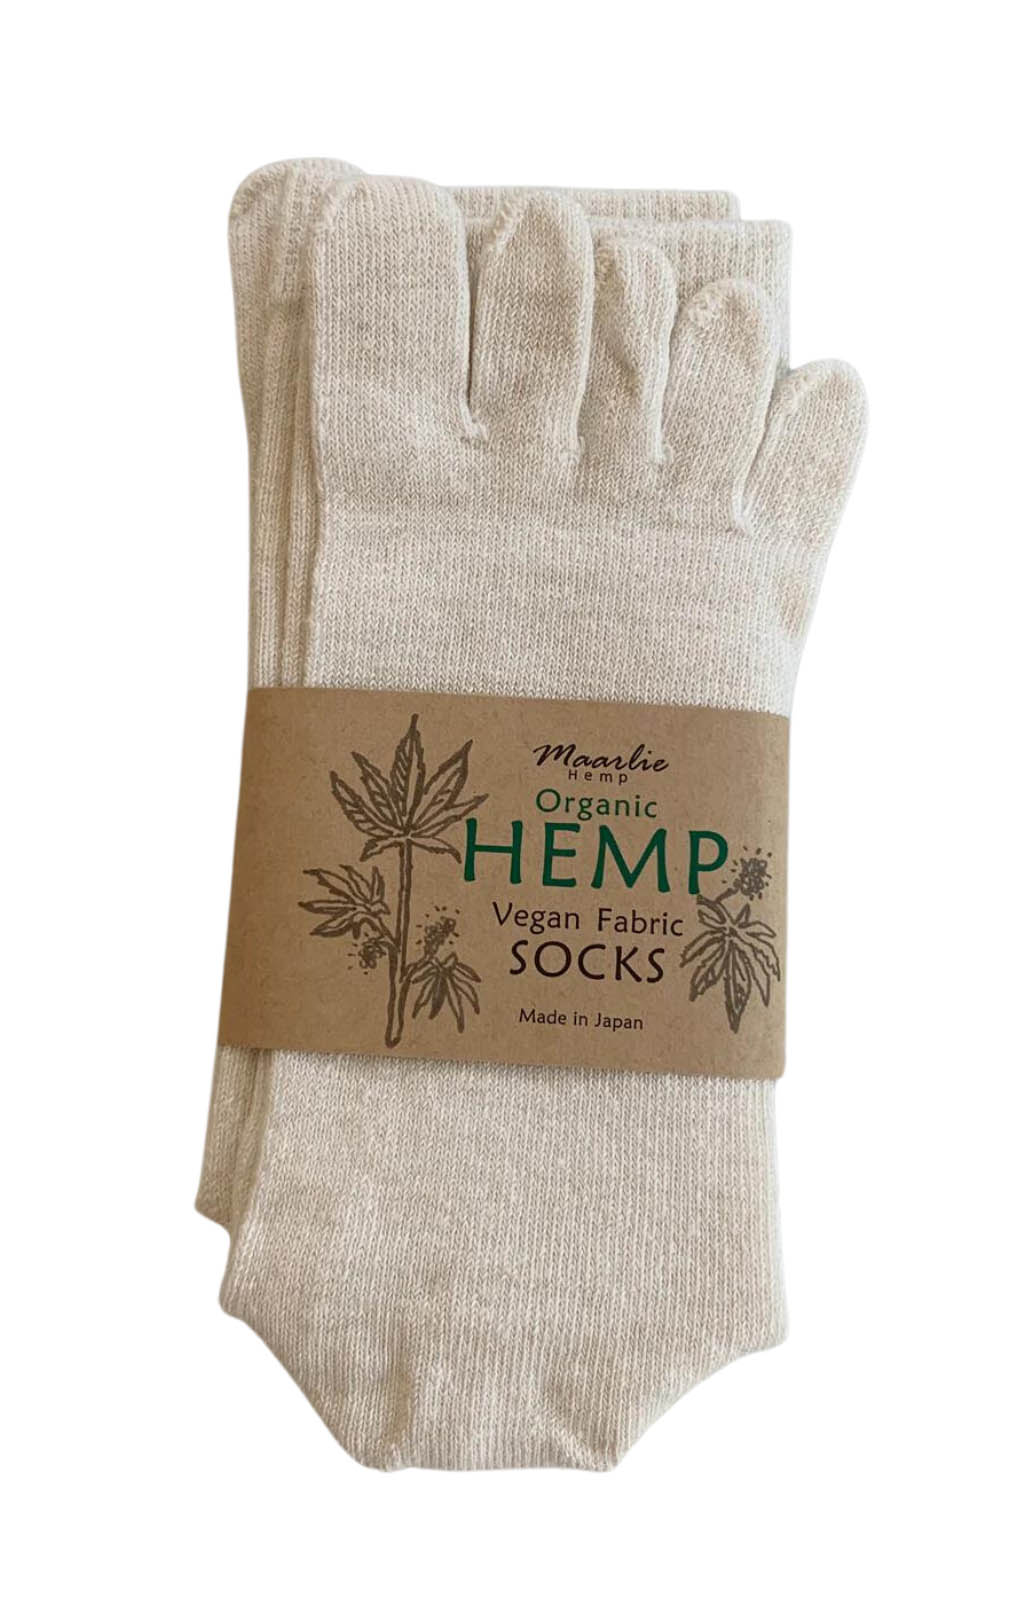 Product photo of Hemp Meditation Toe Socks by Maarlie Hemp